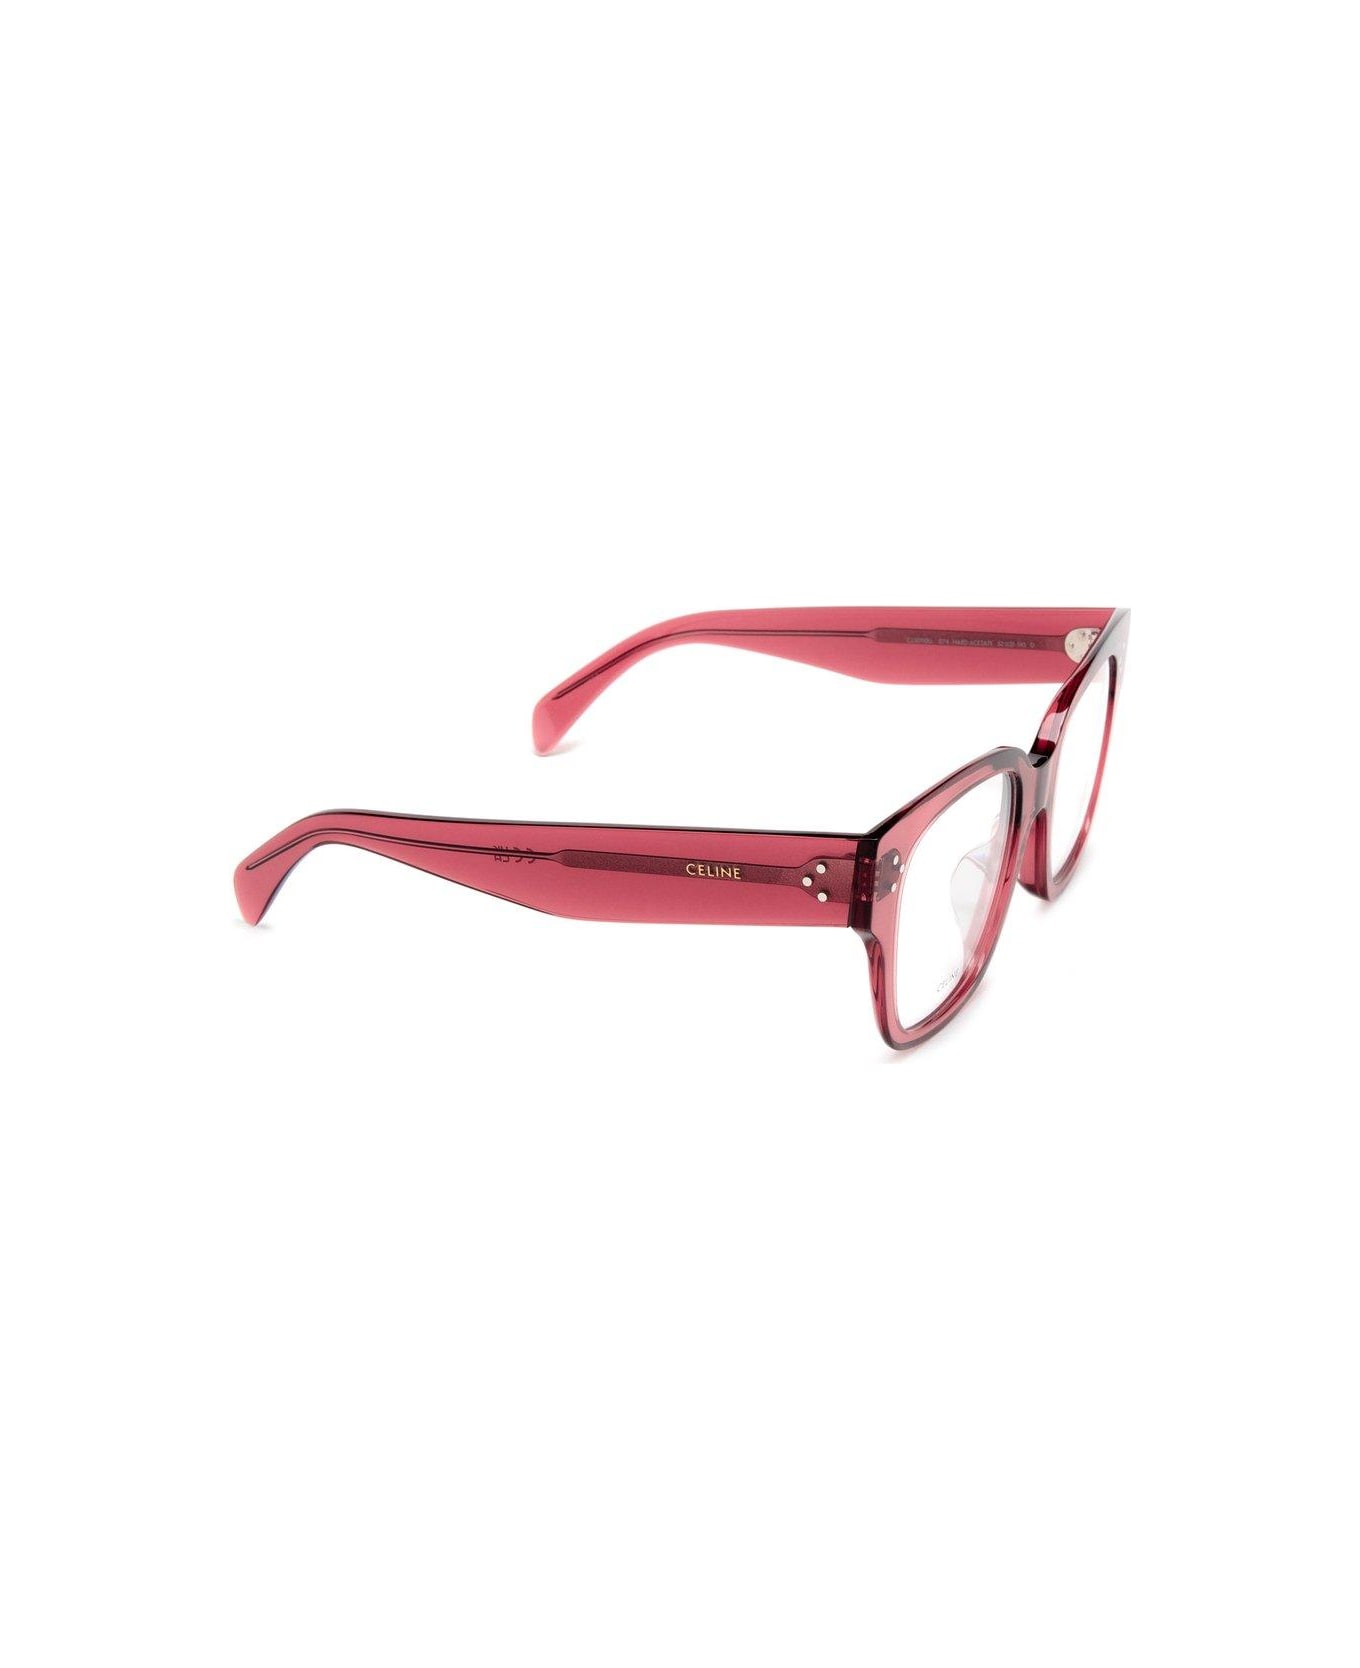 Celine Squared Frame Glasses - 074